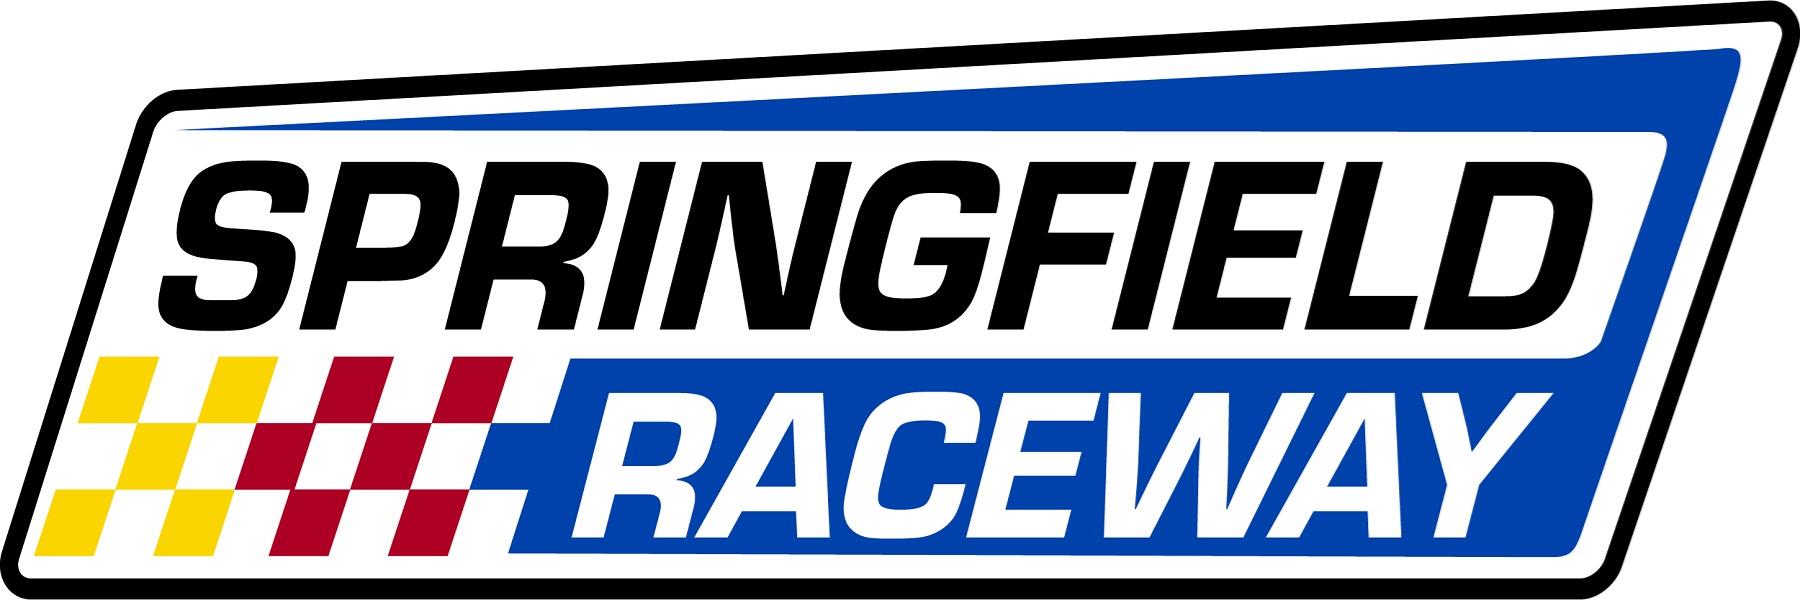 10/9/2021 - Springfield Raceway